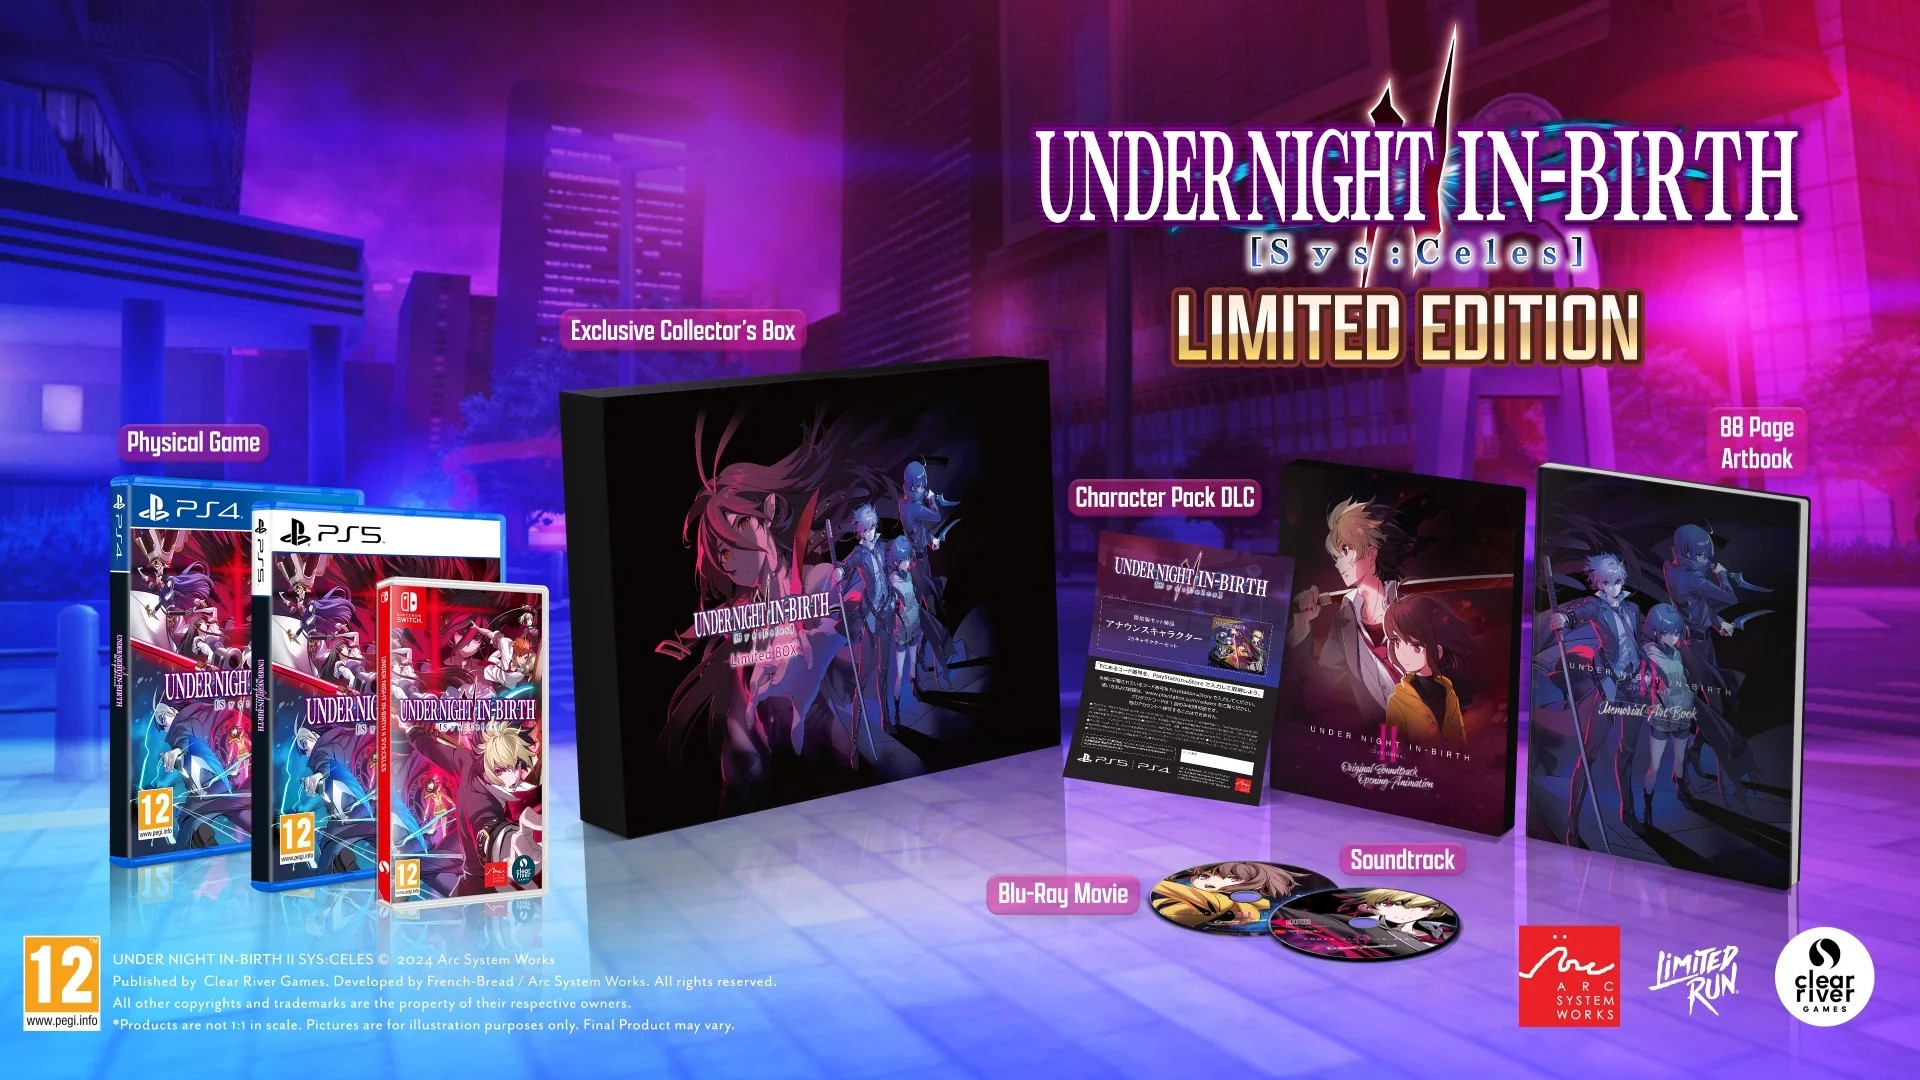 Under Night In-Birth II Limited Edition